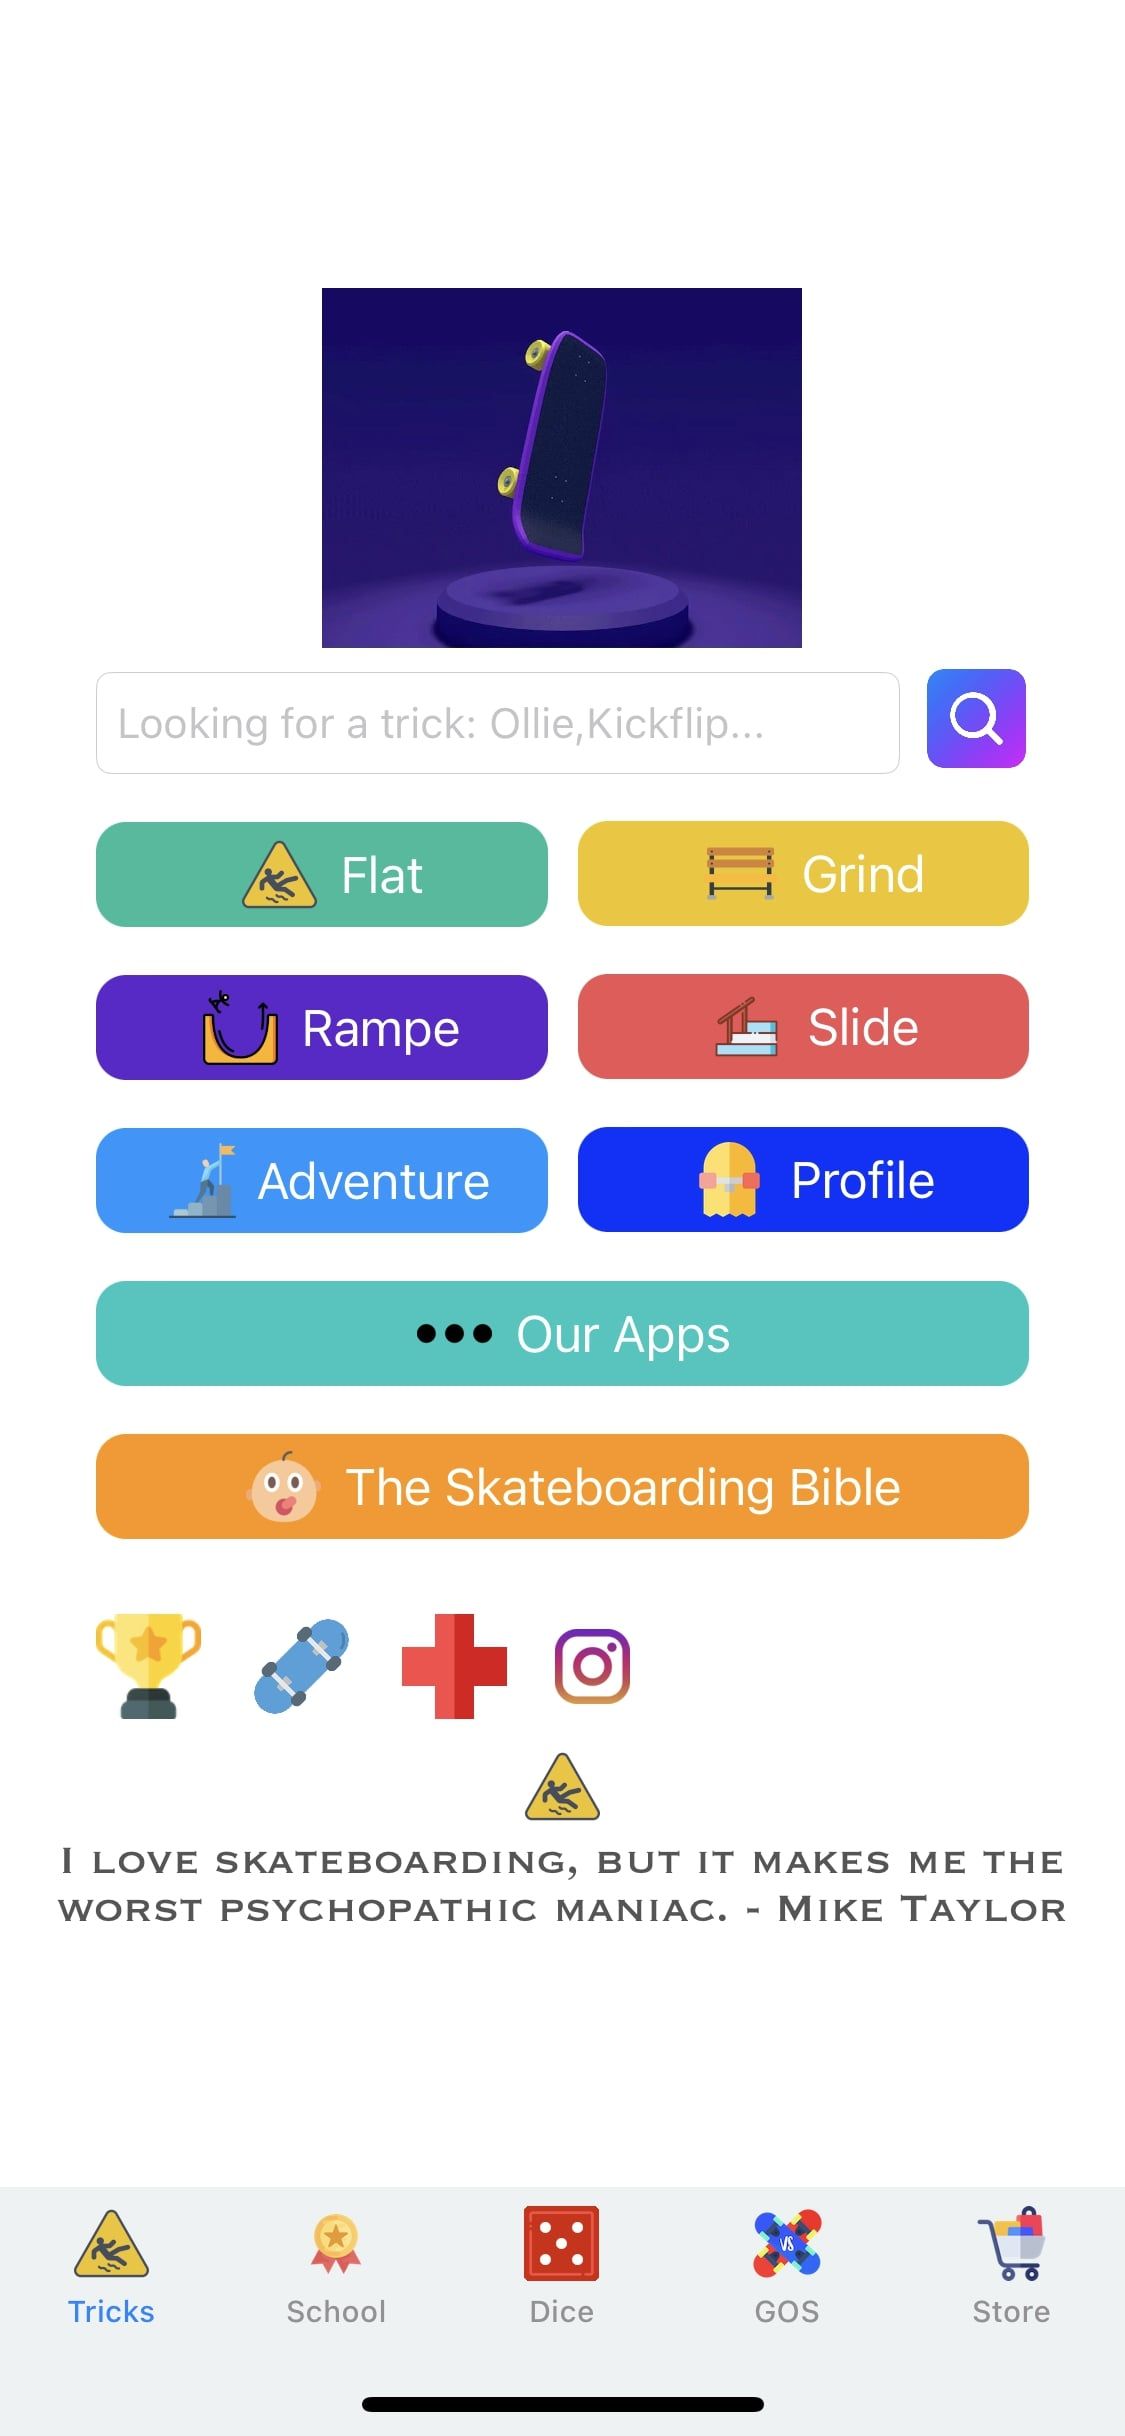 Skate Tricks app Different Trick Categories